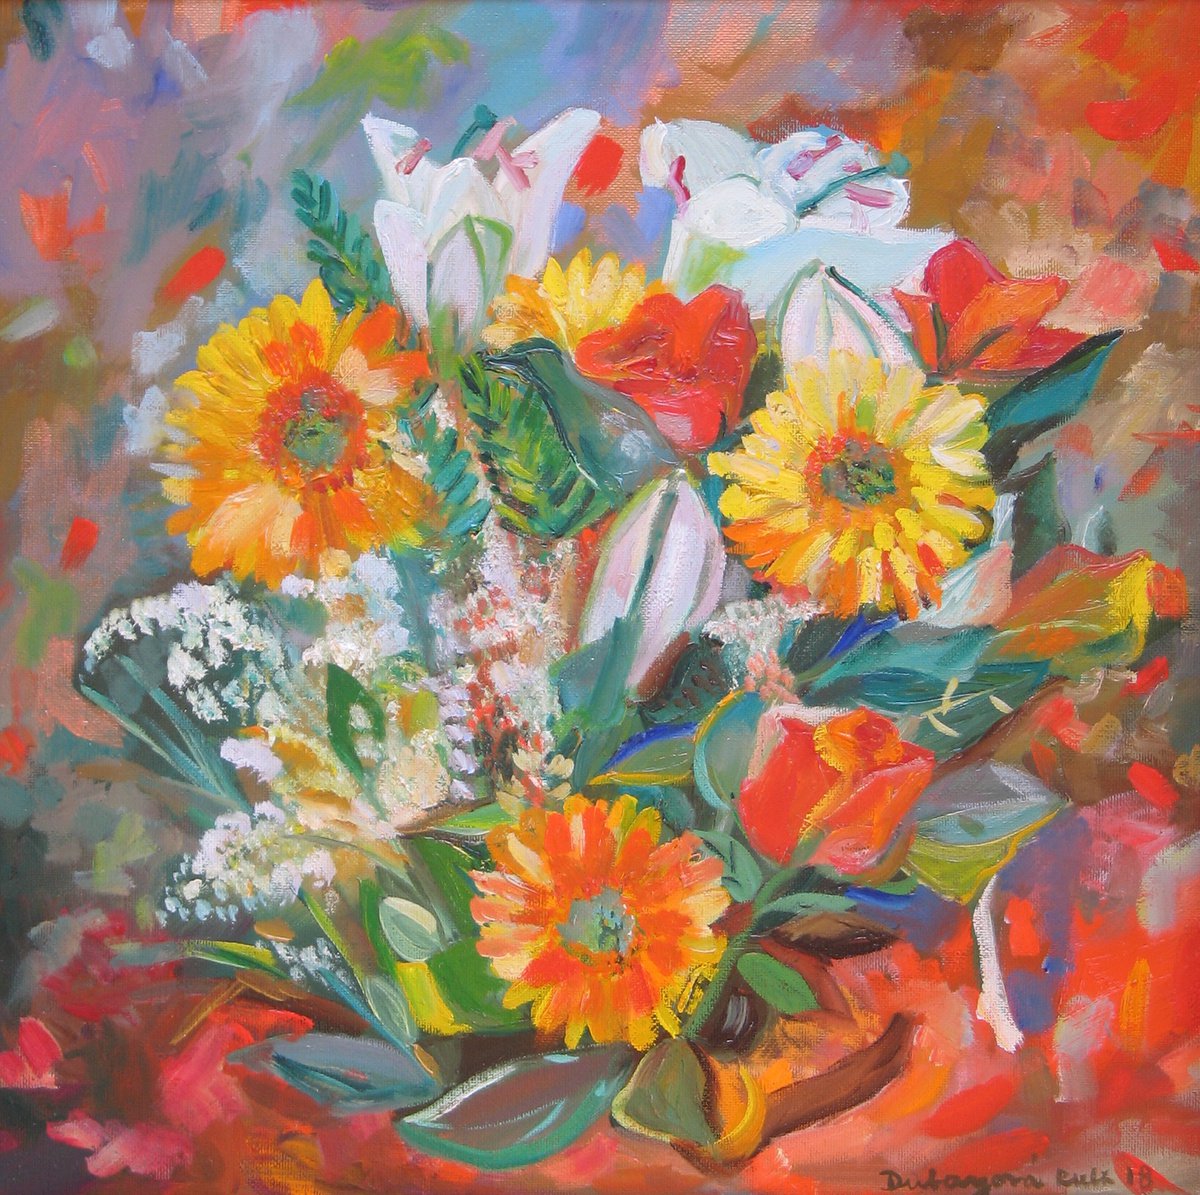 Flowers 38 by Dubayova Ruth